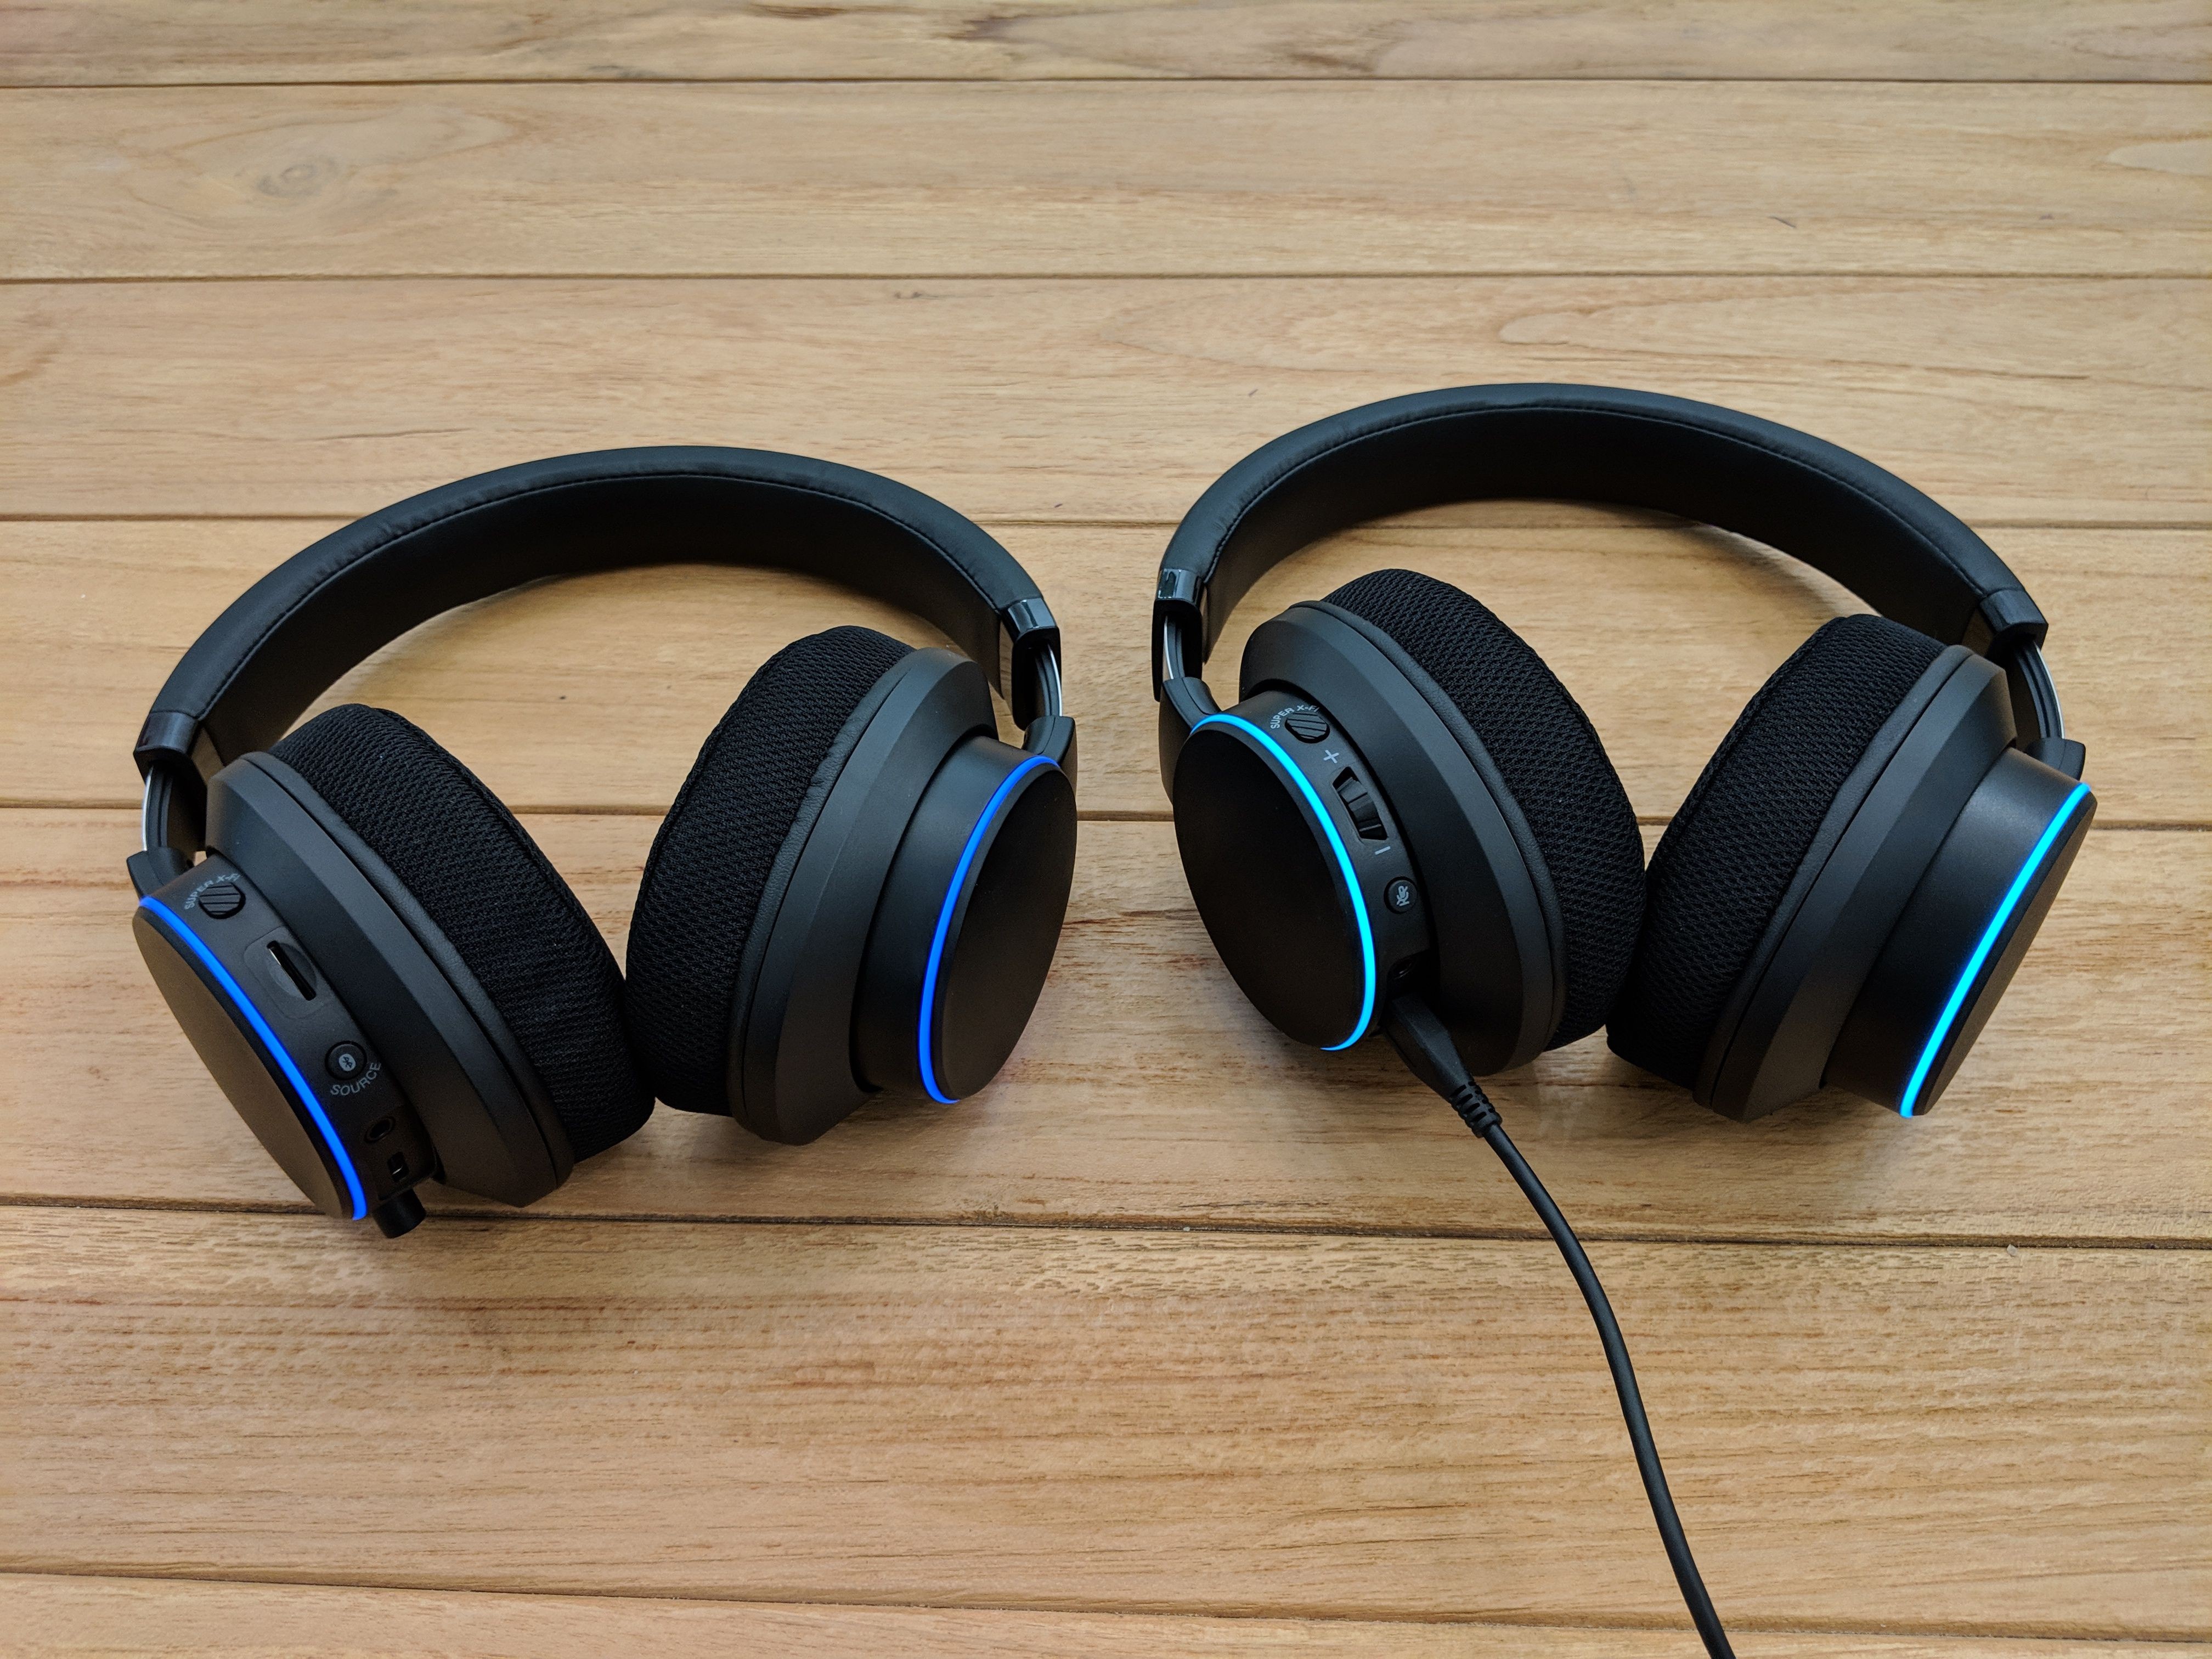 Creative SXFI Air headphones offer home cinema quality sound wherever you are. Photo: Paul Mah